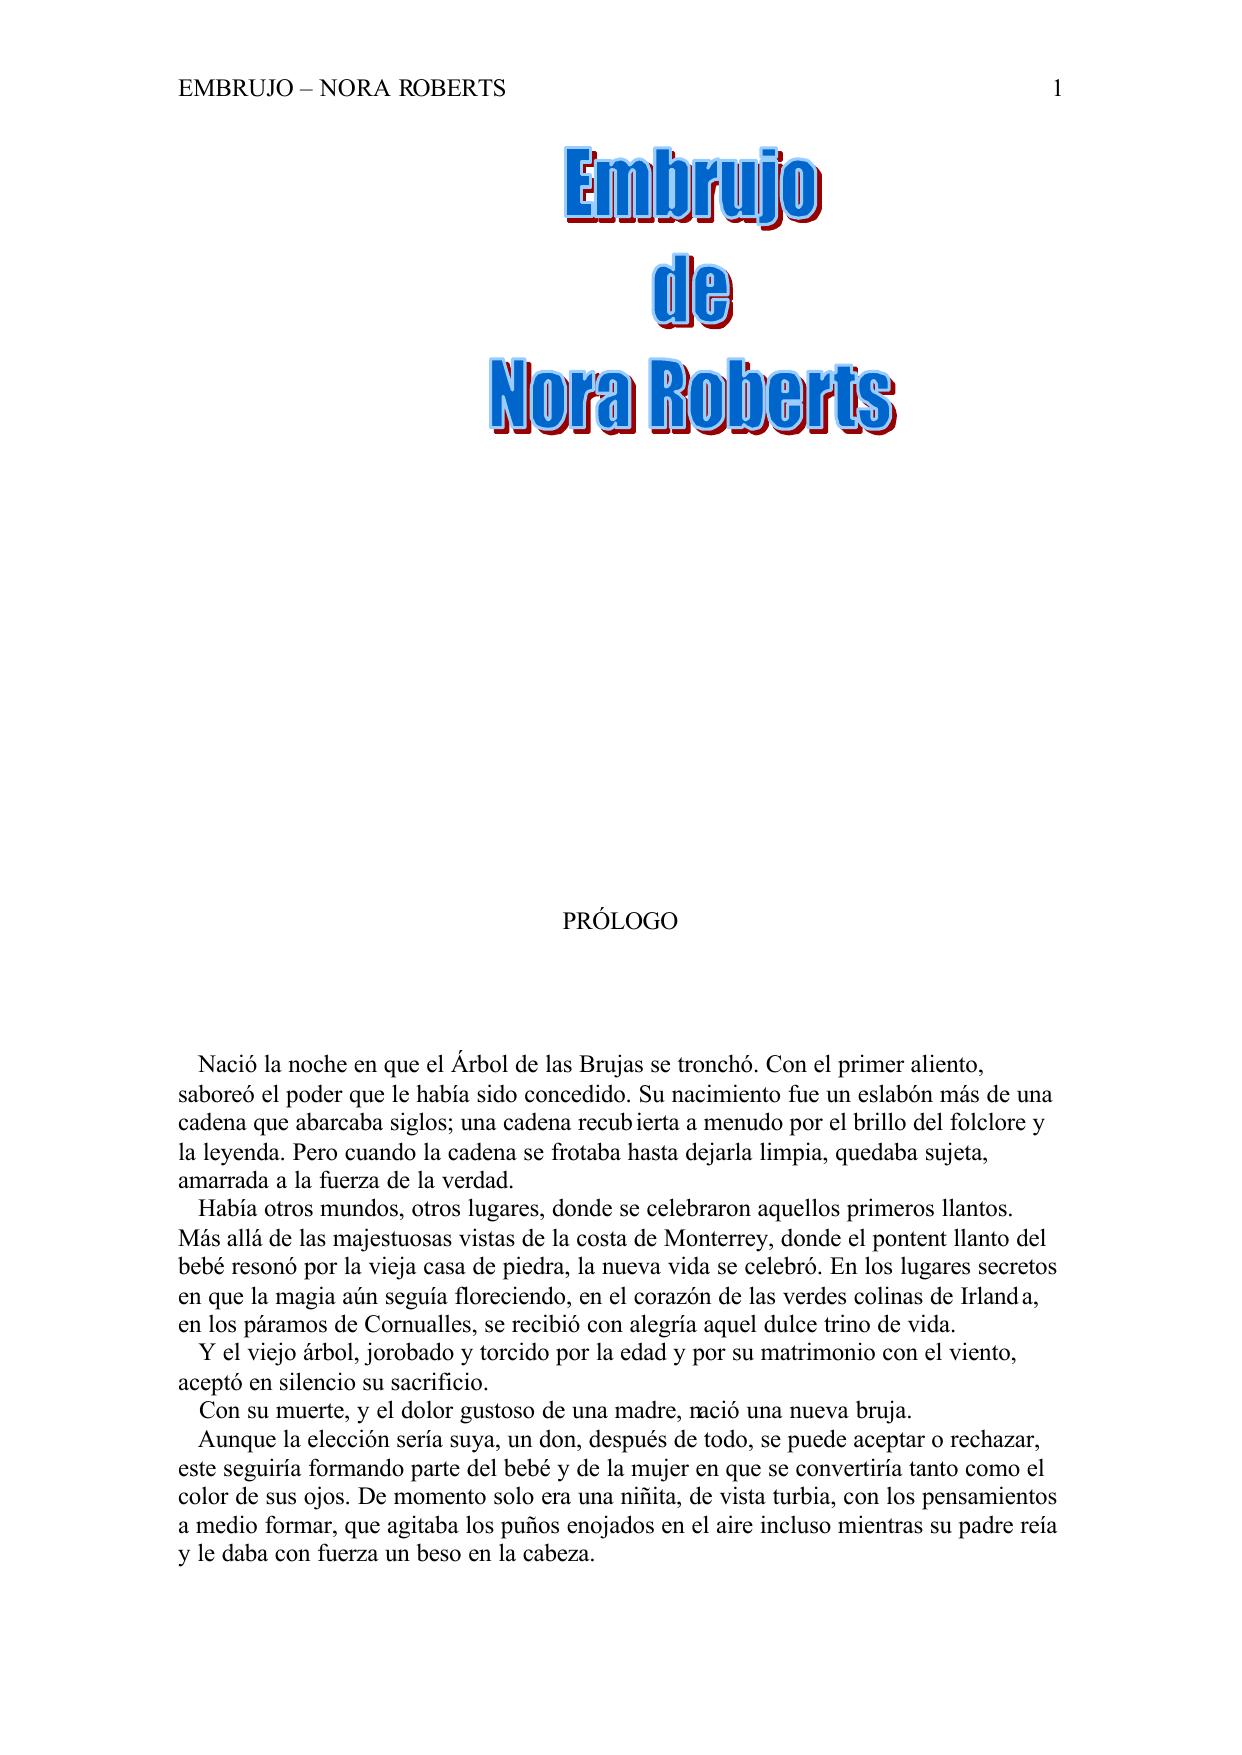 Roberts, Nora - Embrujo.doc